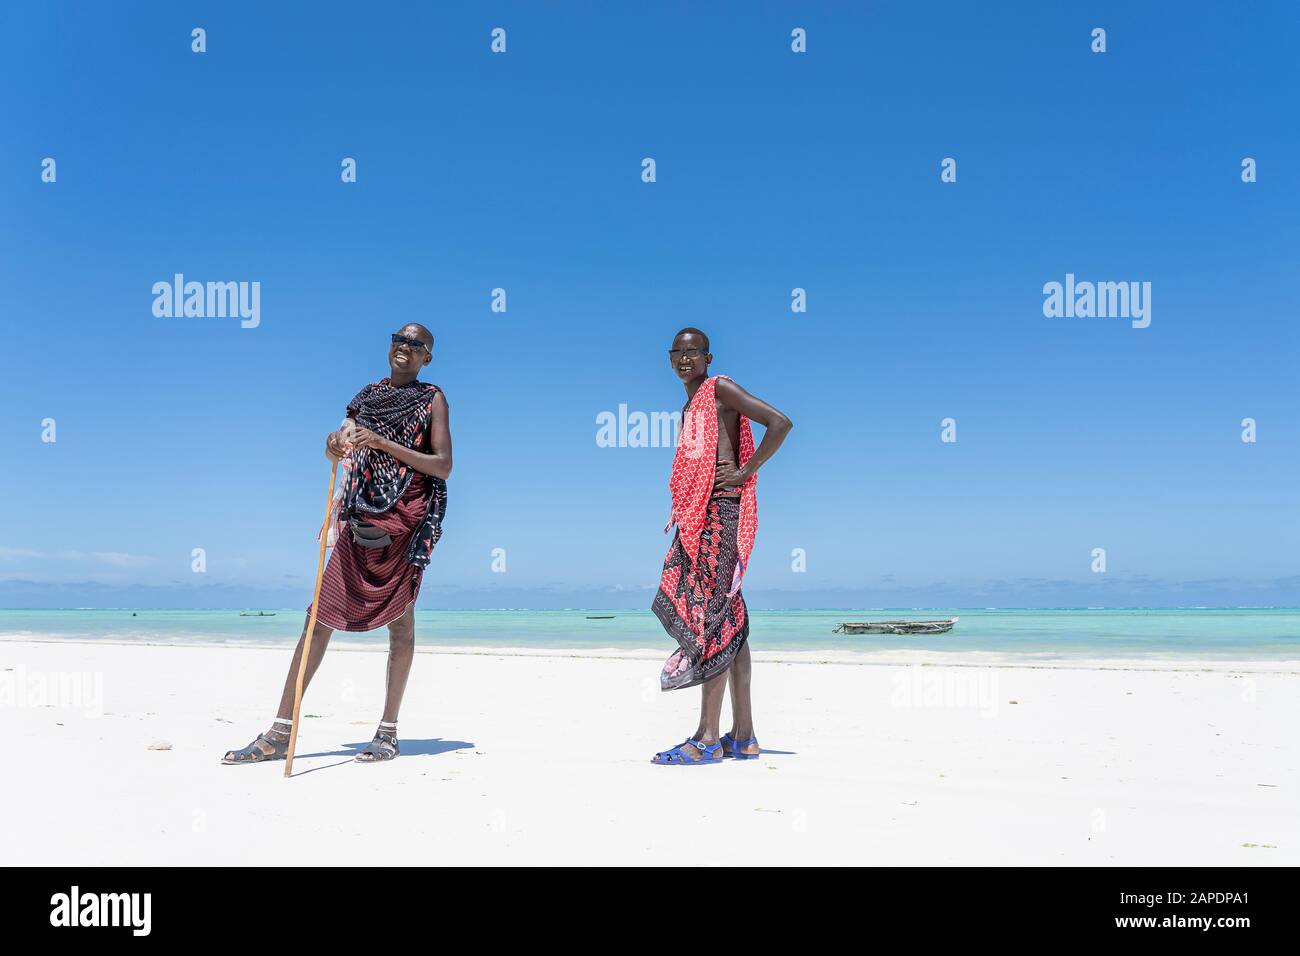 Zanzíbar, Tanzania - 28 de octubre de 2019 : Dos hombres africanos masai vestidos con ropa tradicional cerca del océano en la playa de arena, Zanzíbar, Fotografía de stock - Alamy